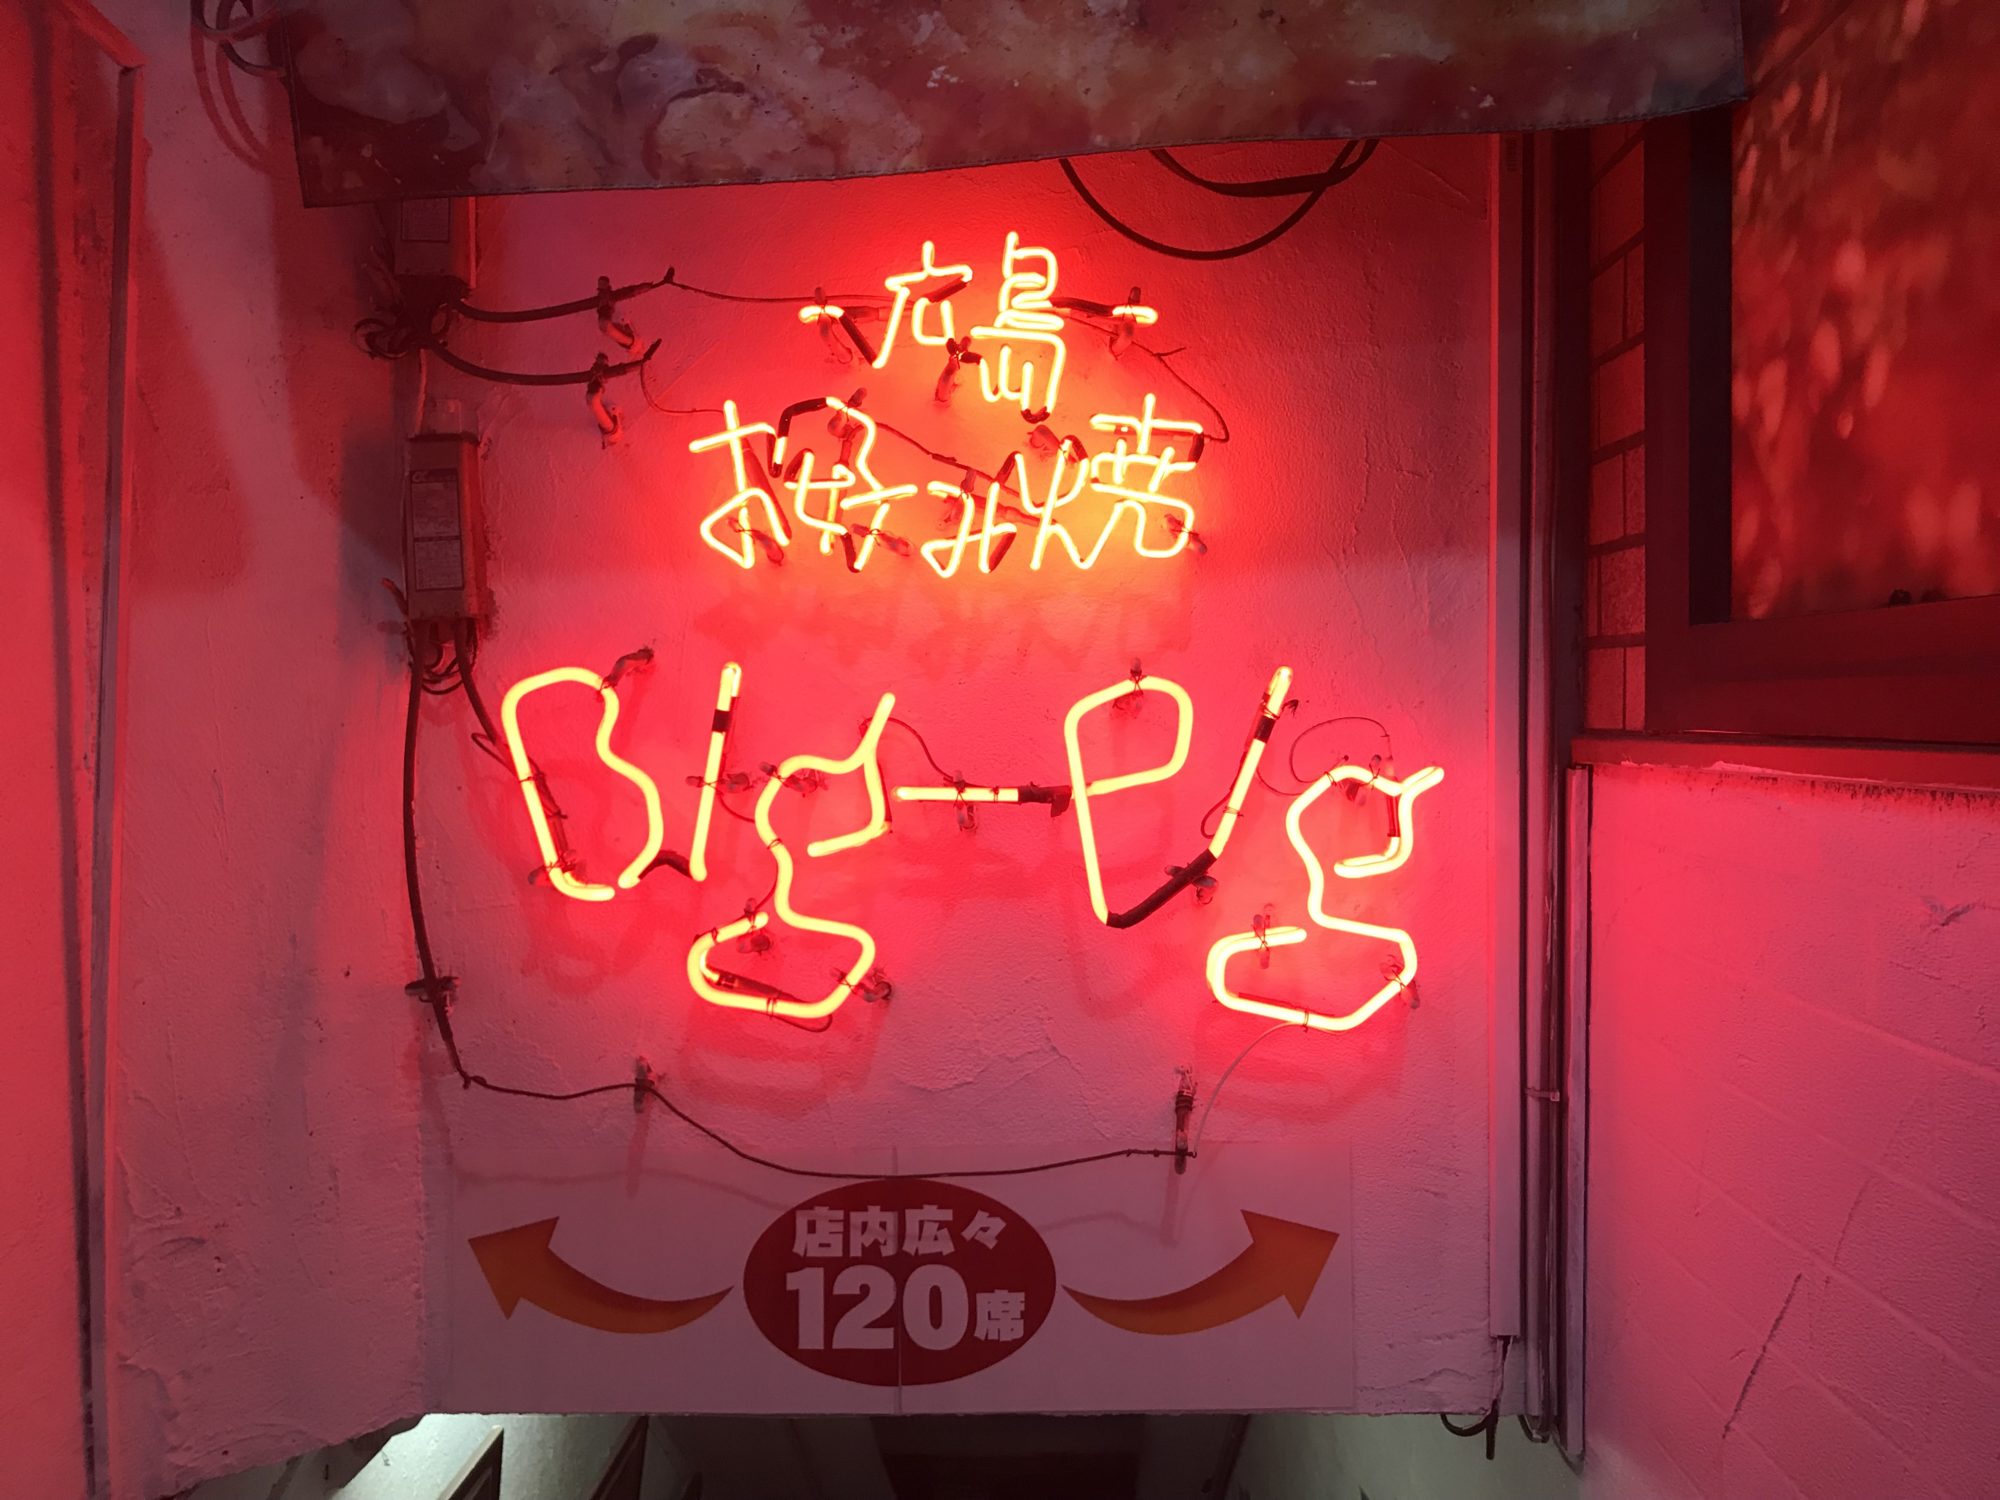 Big-Pig 神田カープ本店